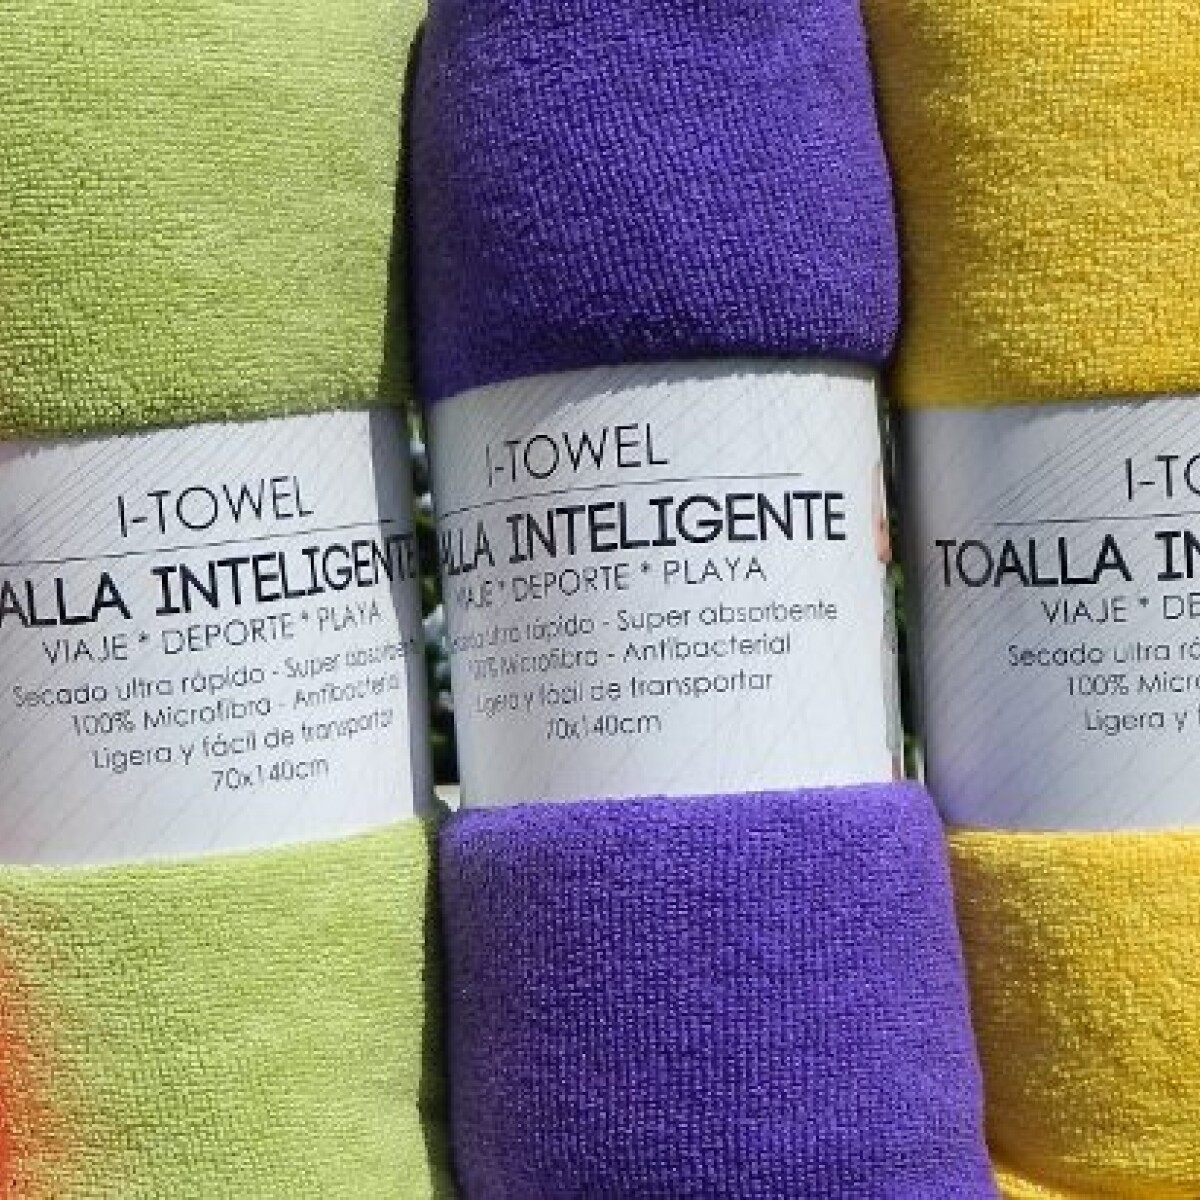 I Towel Toalla Inteligente Varios